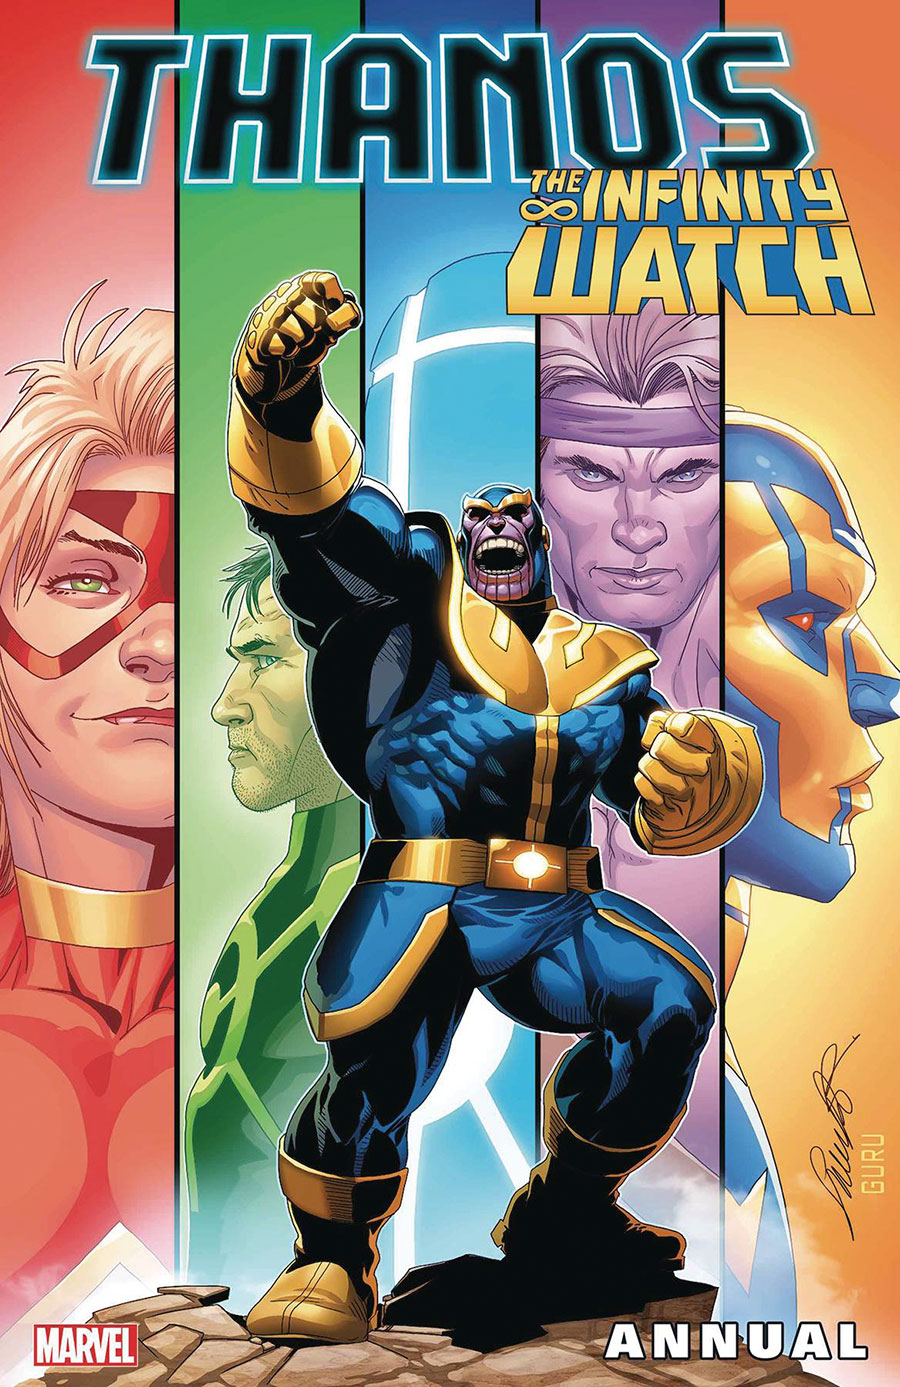 Thanos Vol 4 Annual #1 (One Shot) Cover A Regular Salvador Larroca Cover (Infinity Watch Part 1)